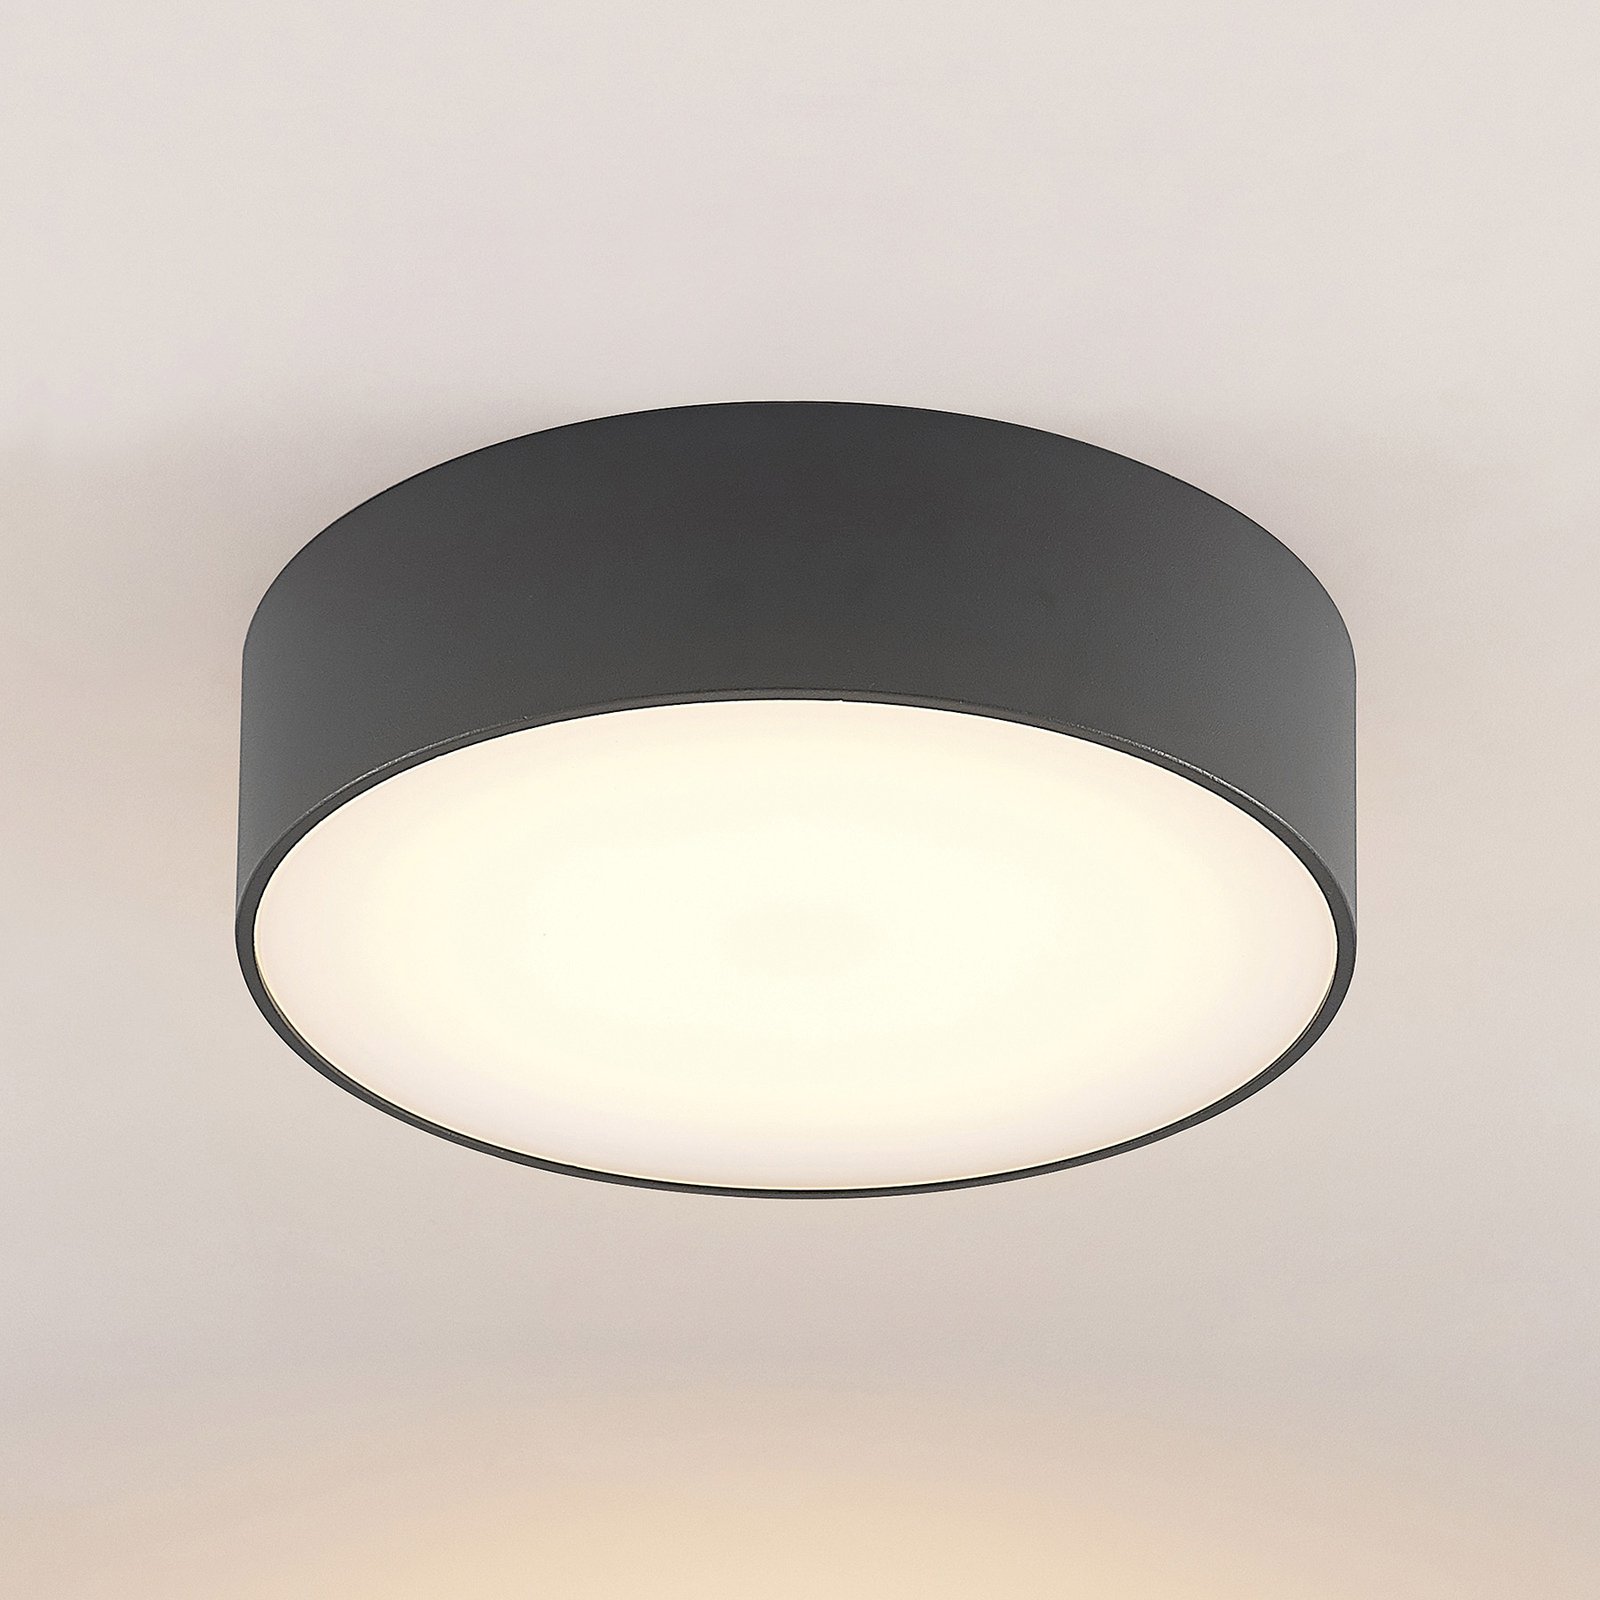 Arcchio Dakari LED outdoor ceiling light, smart